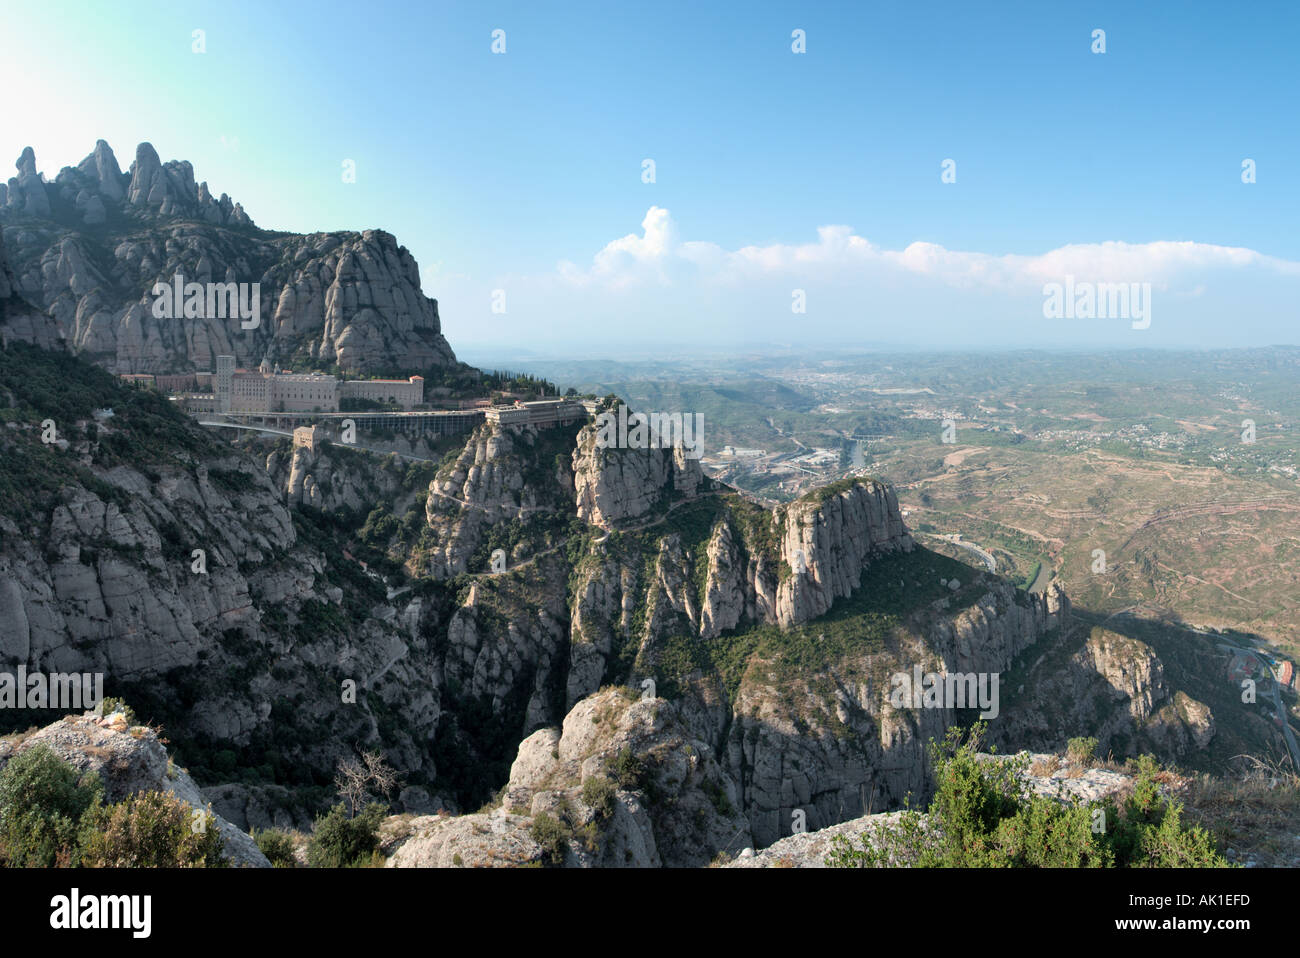 View of Monastery from Mirador de Sant Miquel, Montserrat, Catalunya, Spain Stock Photo